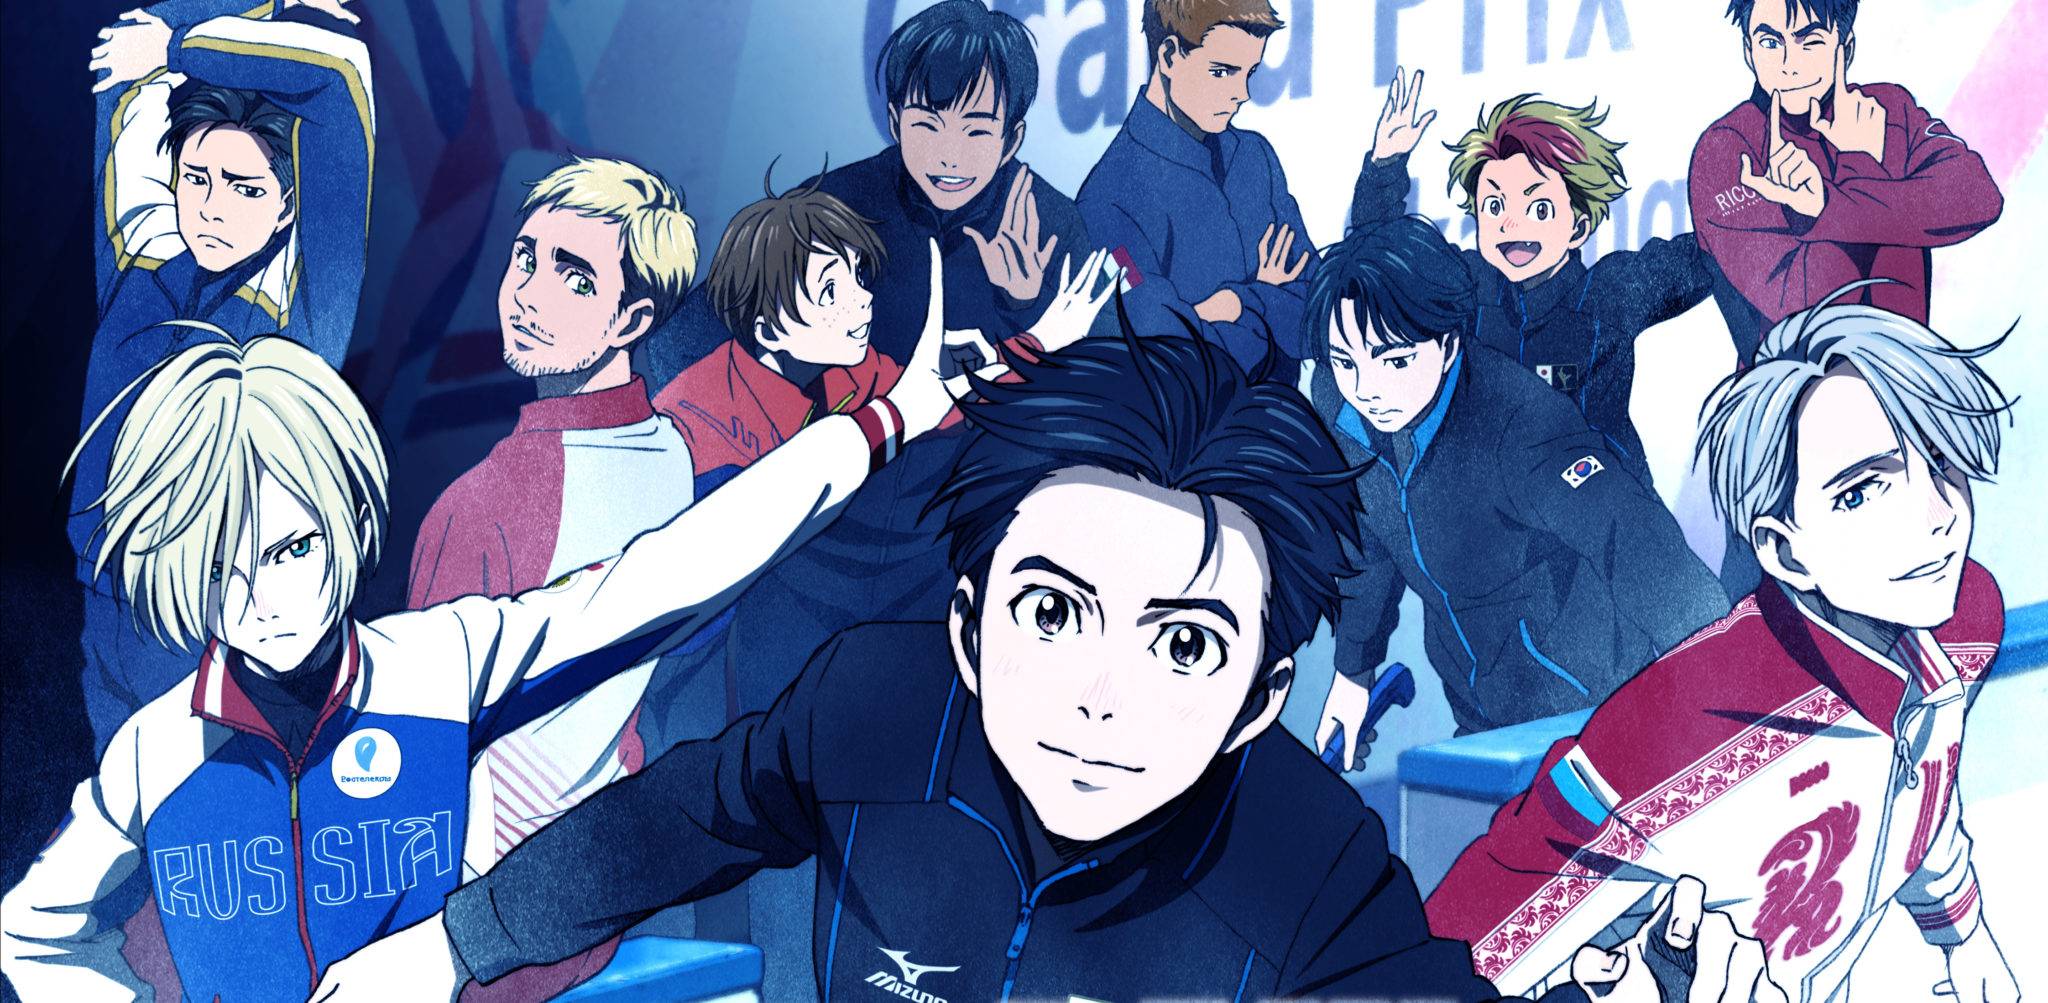 Team Japan Brings Popular Anime 'Yuri!!! On Ice' To The Olympics News